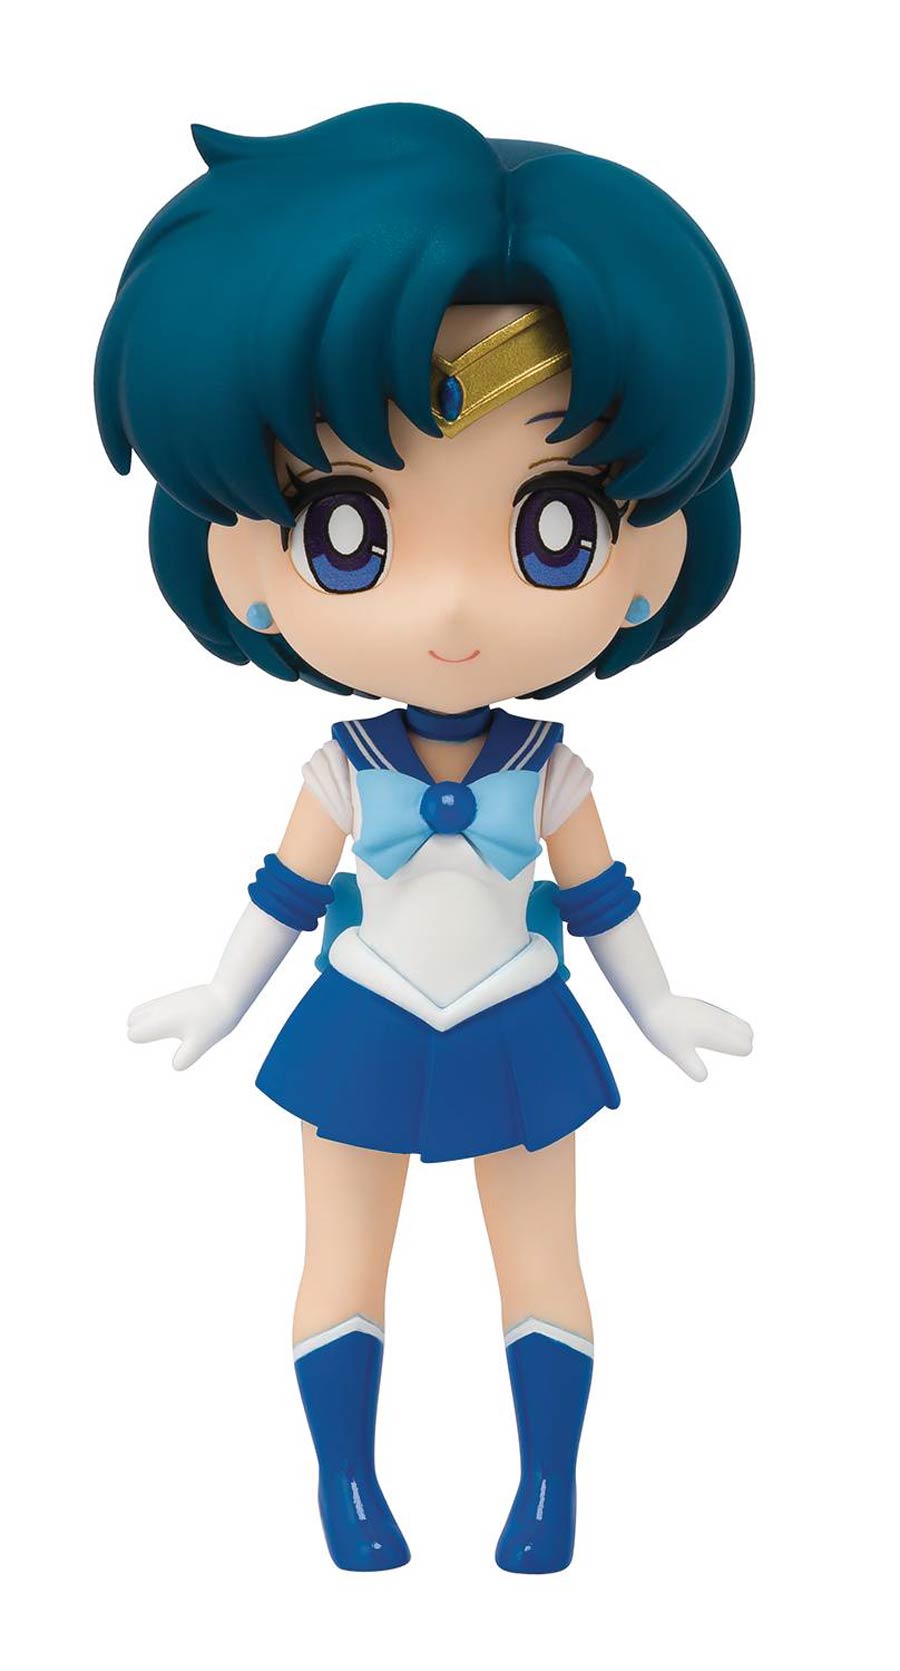 Sailor Moon Figuarts Mini #002 Sailor Mercury Action Figure